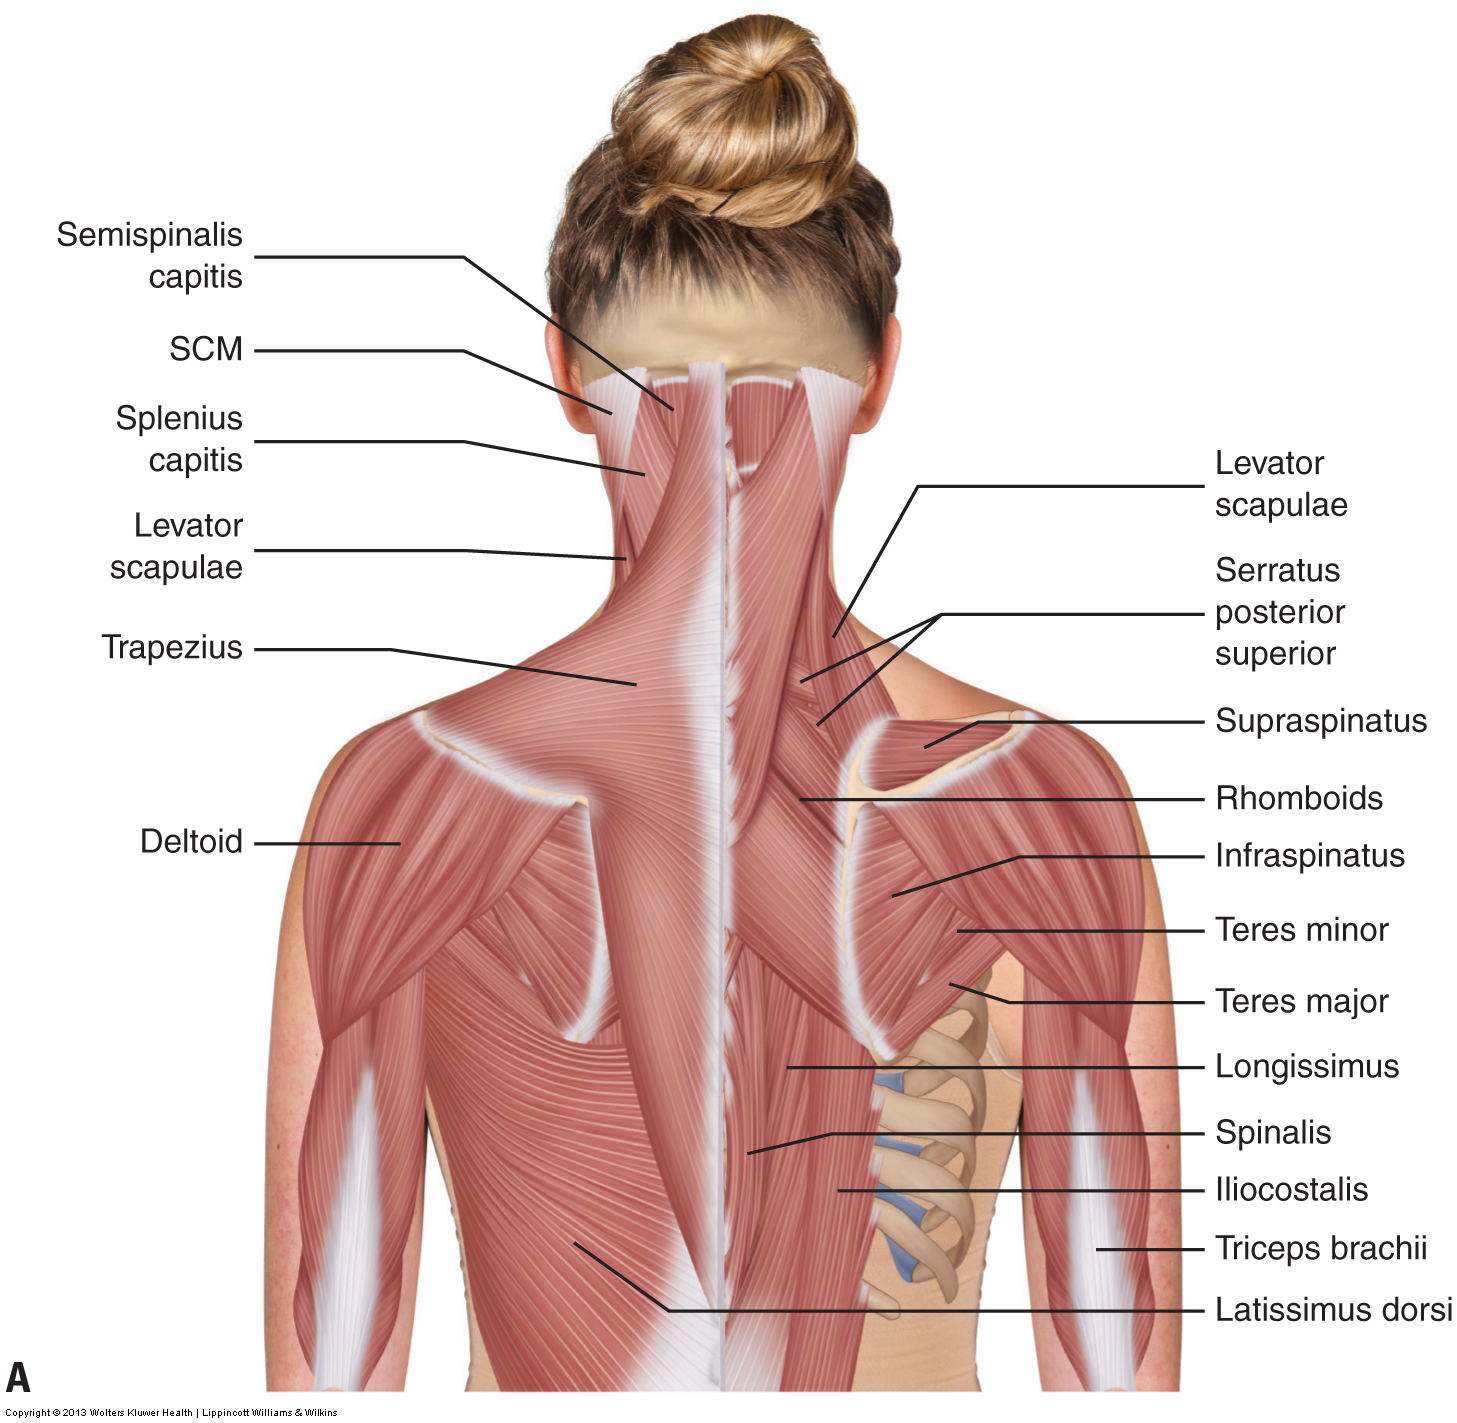 cervical region muscles